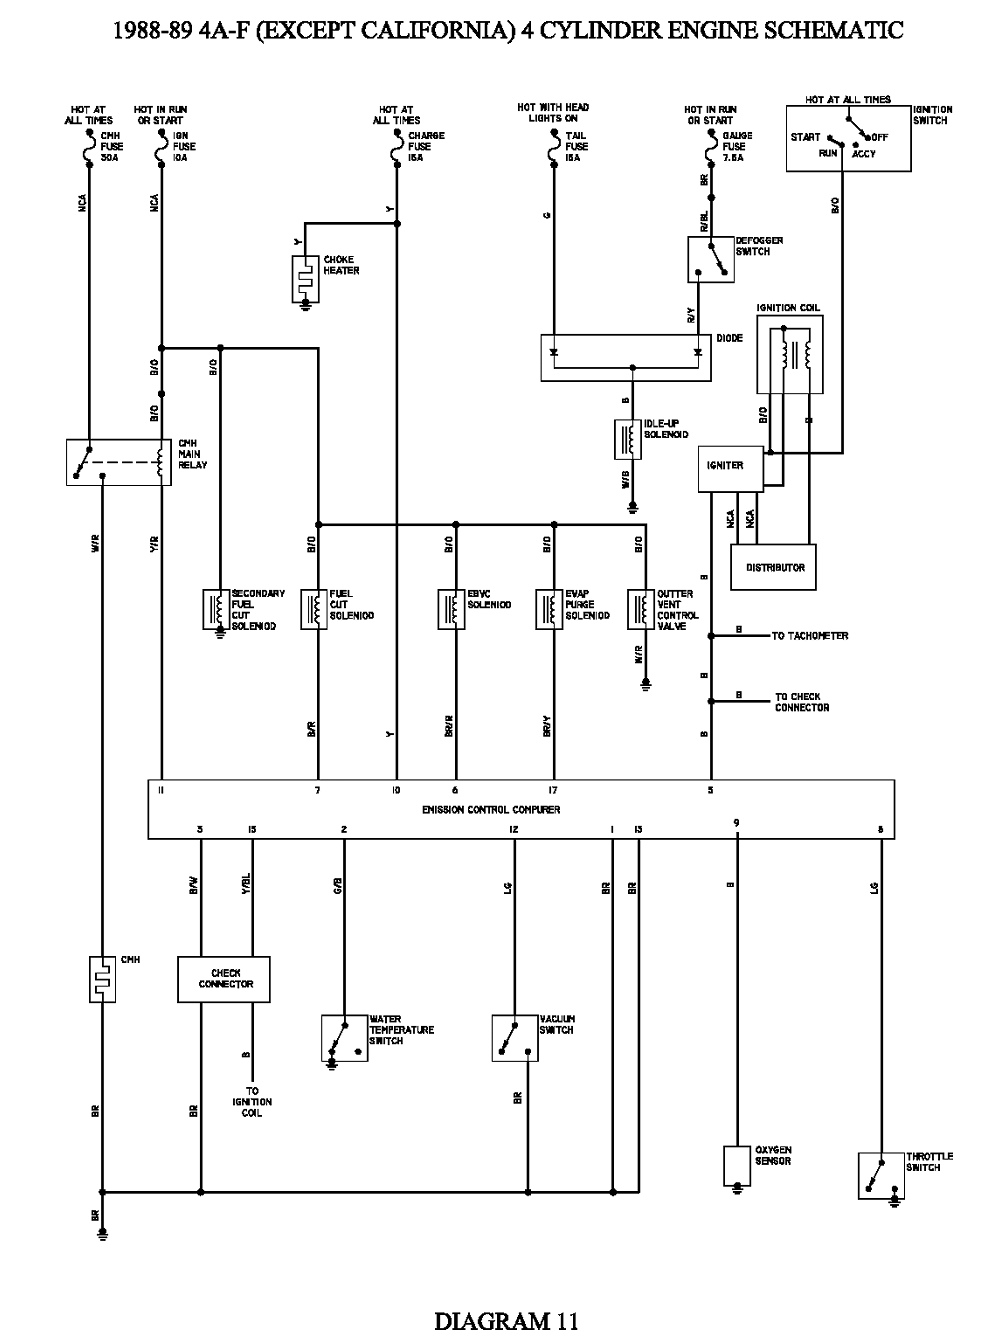 1991 Rx-7 Starter Motor Wiring Diagram from lh5.googleusercontent.com